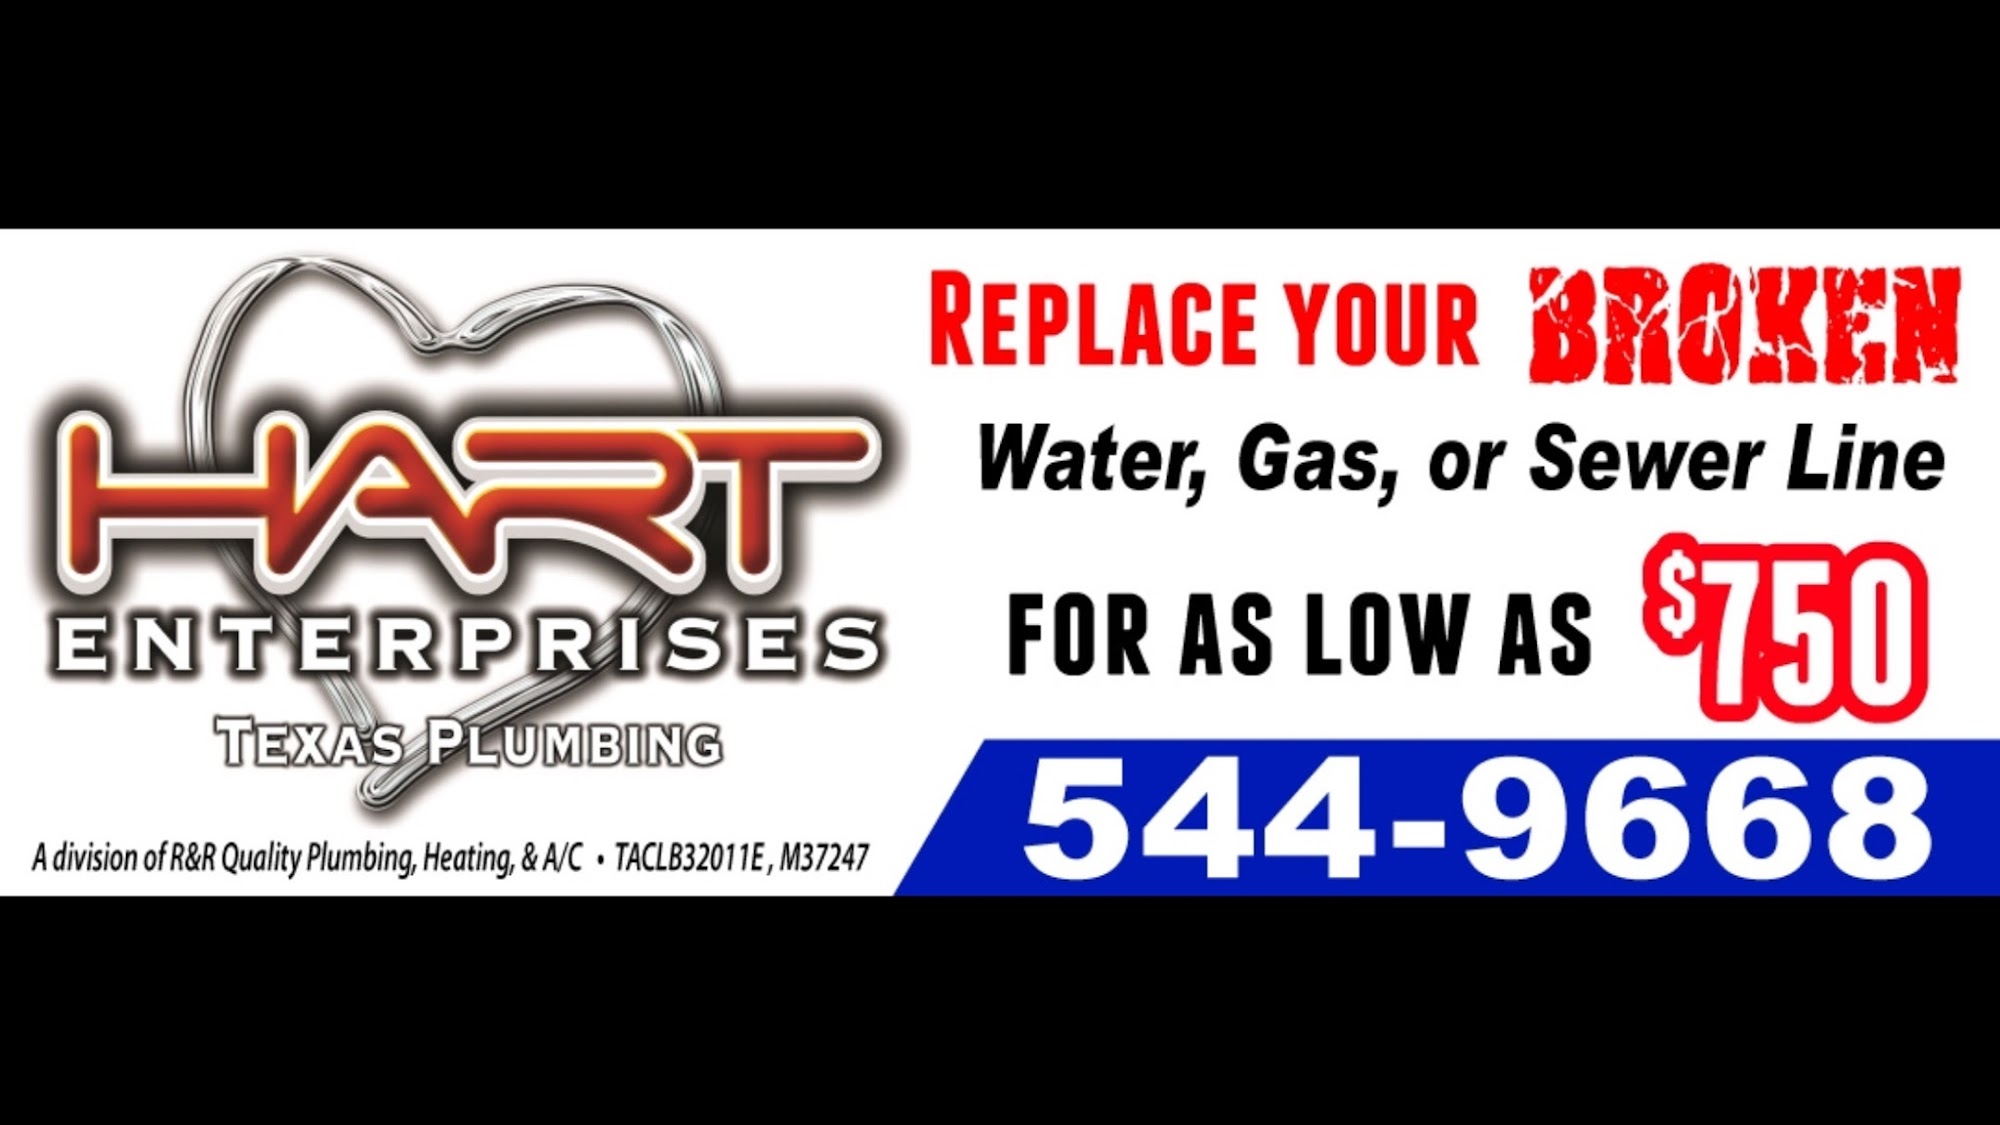 Hart Enterprises Texas Plumbing 806-544-9668 1611 10th St, Wilson Texas 79381